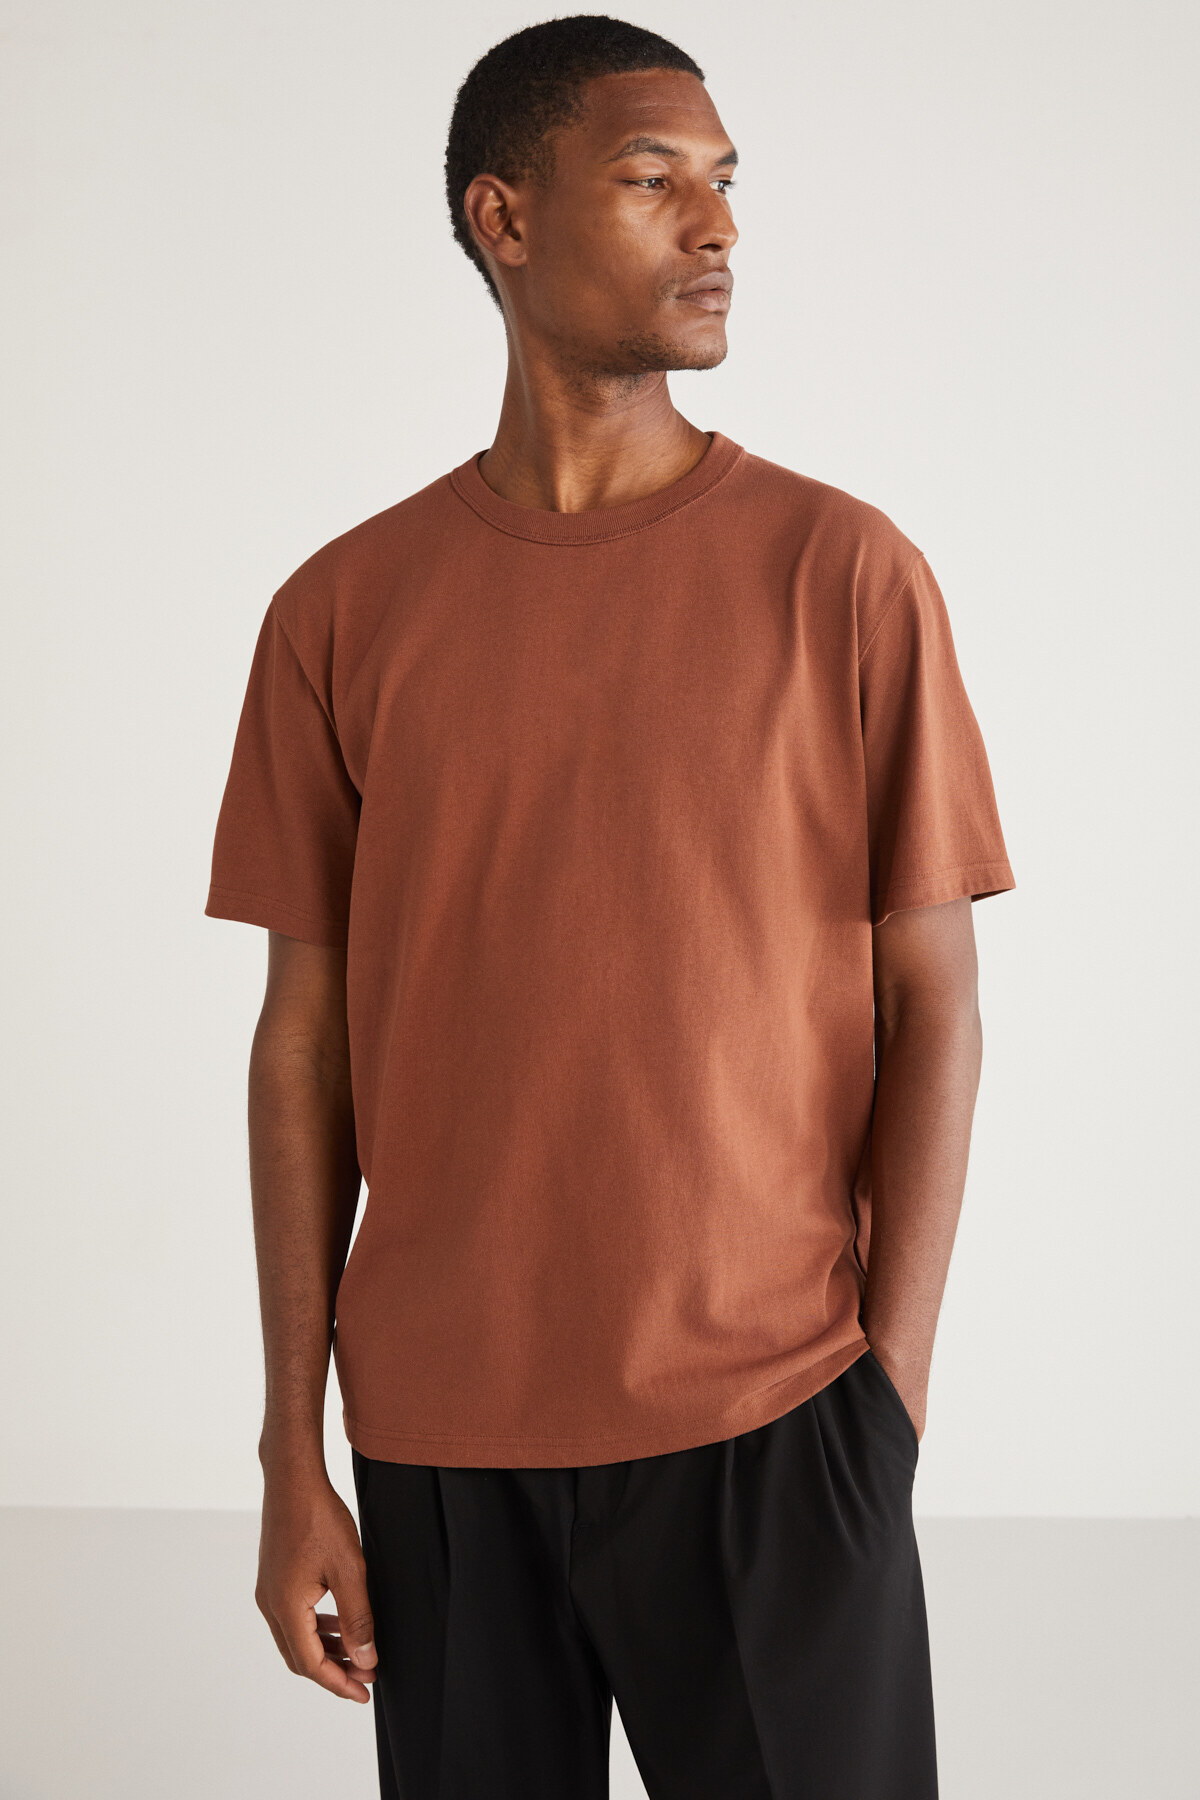 Levně GRIMELANGE Astons Men's Comfort Fit Thick Textured Recycle 100% Cotton Dark Brown T-shir